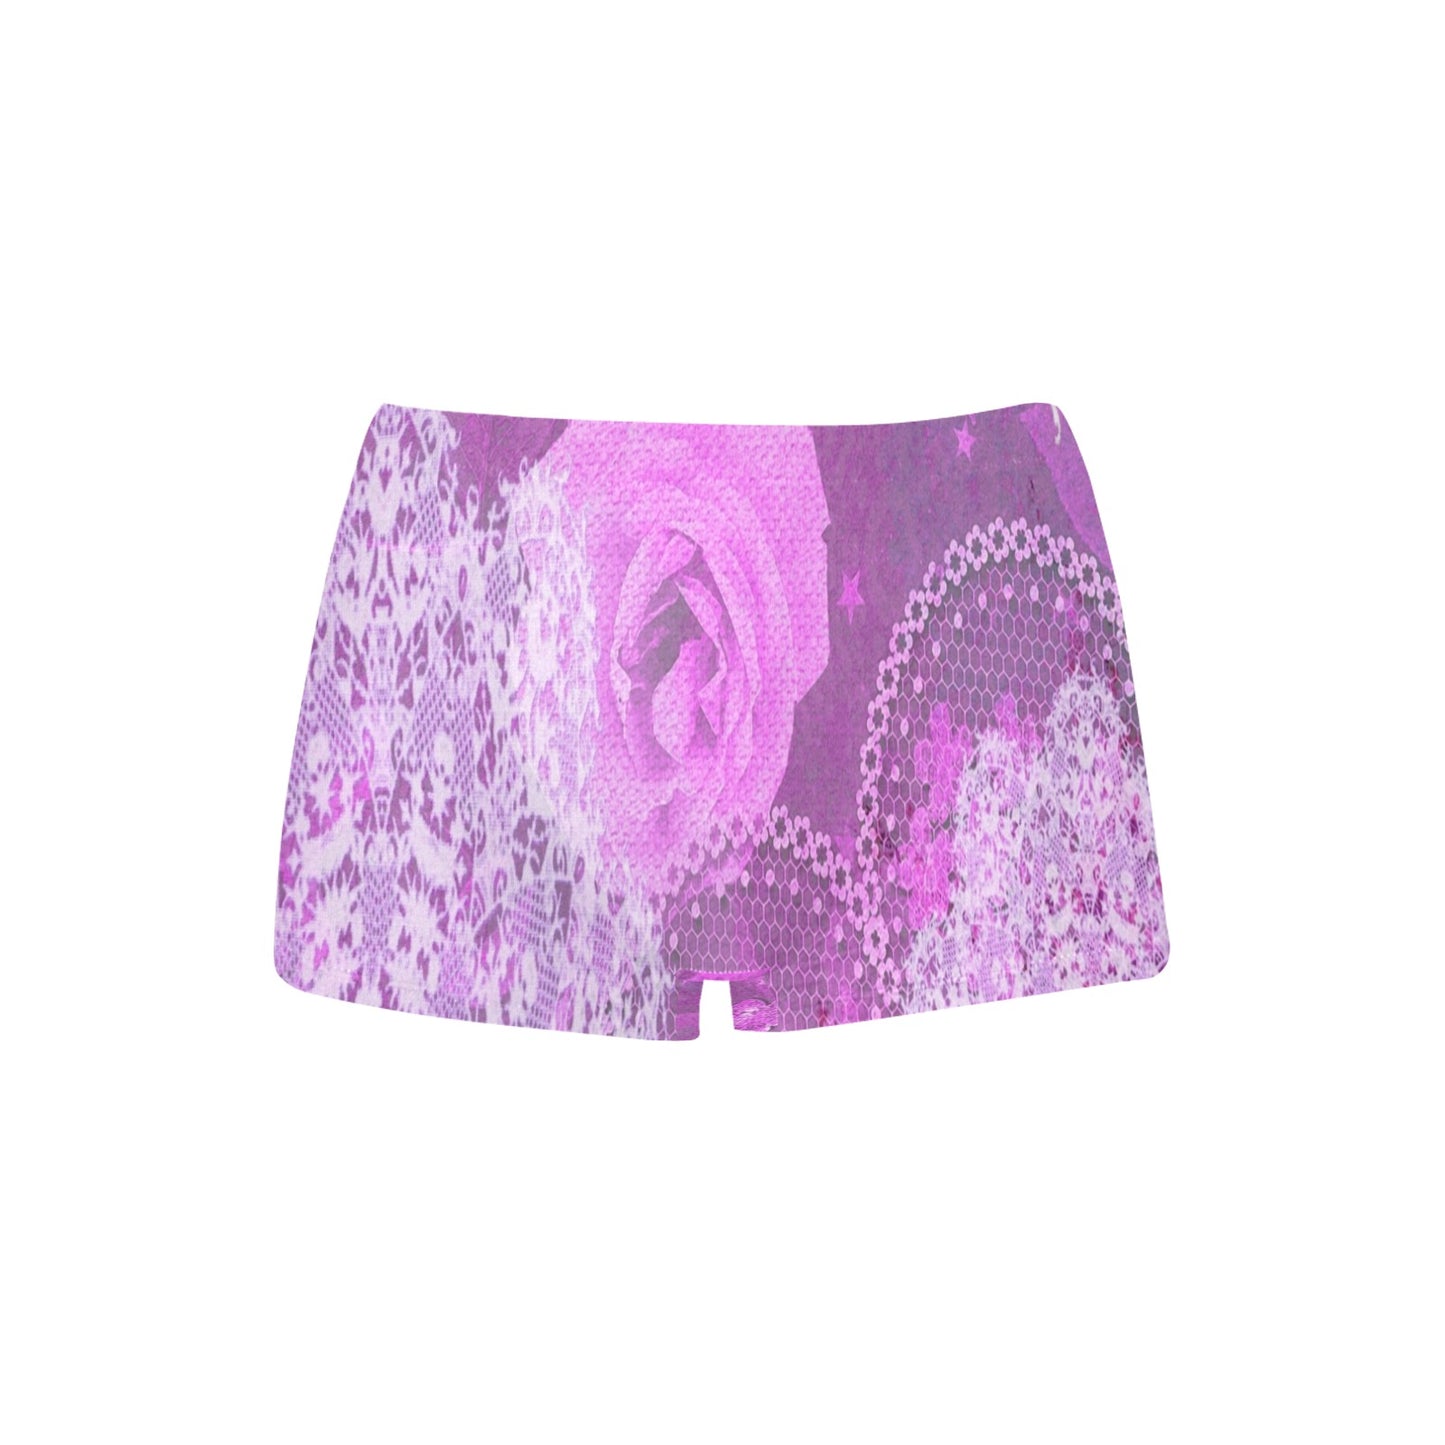 Printed Lace Boyshorts, daisy dukes, pum pum shorts, shortie shorts , design 03